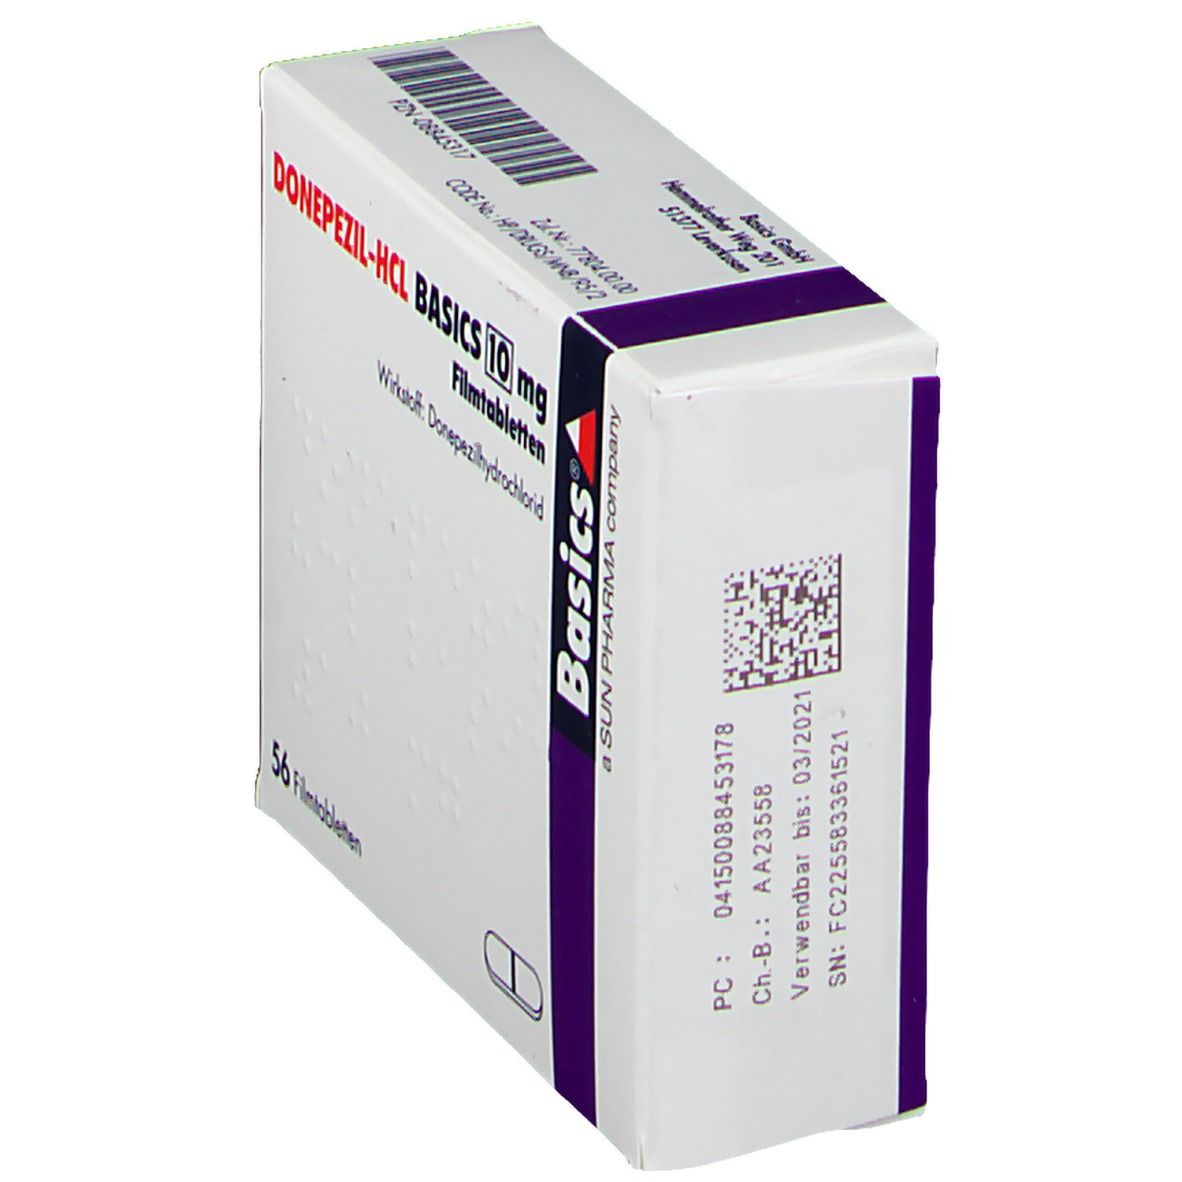 DONEPEZIL-HCL BASICS 10 mg